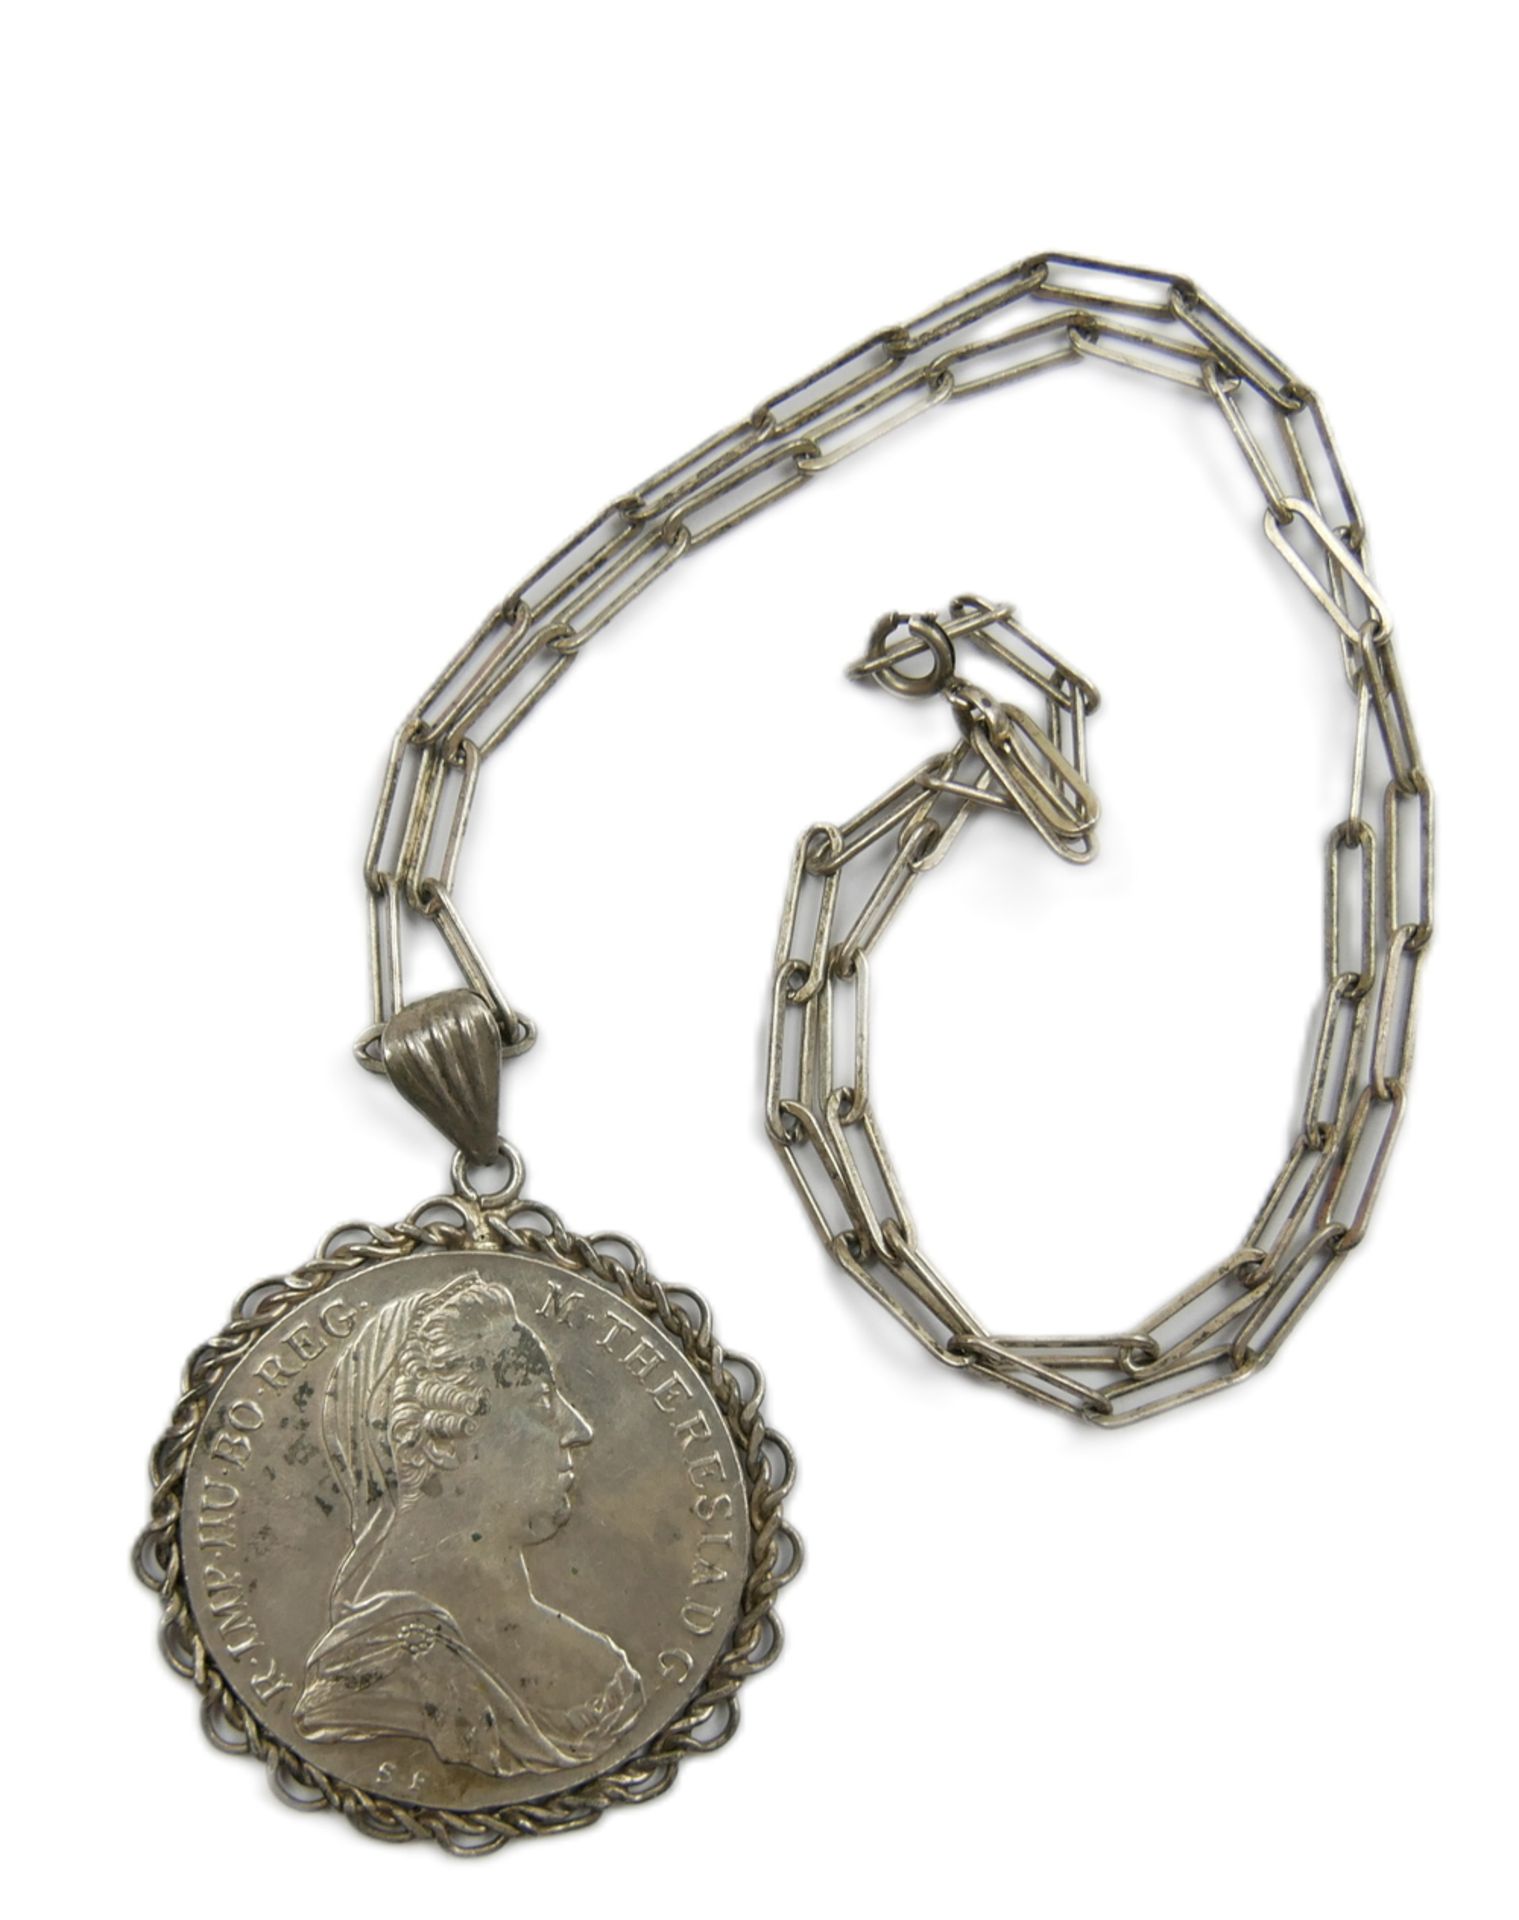 Maria Theresia Thaler mit Silberkette. Länge ca. 49 cm